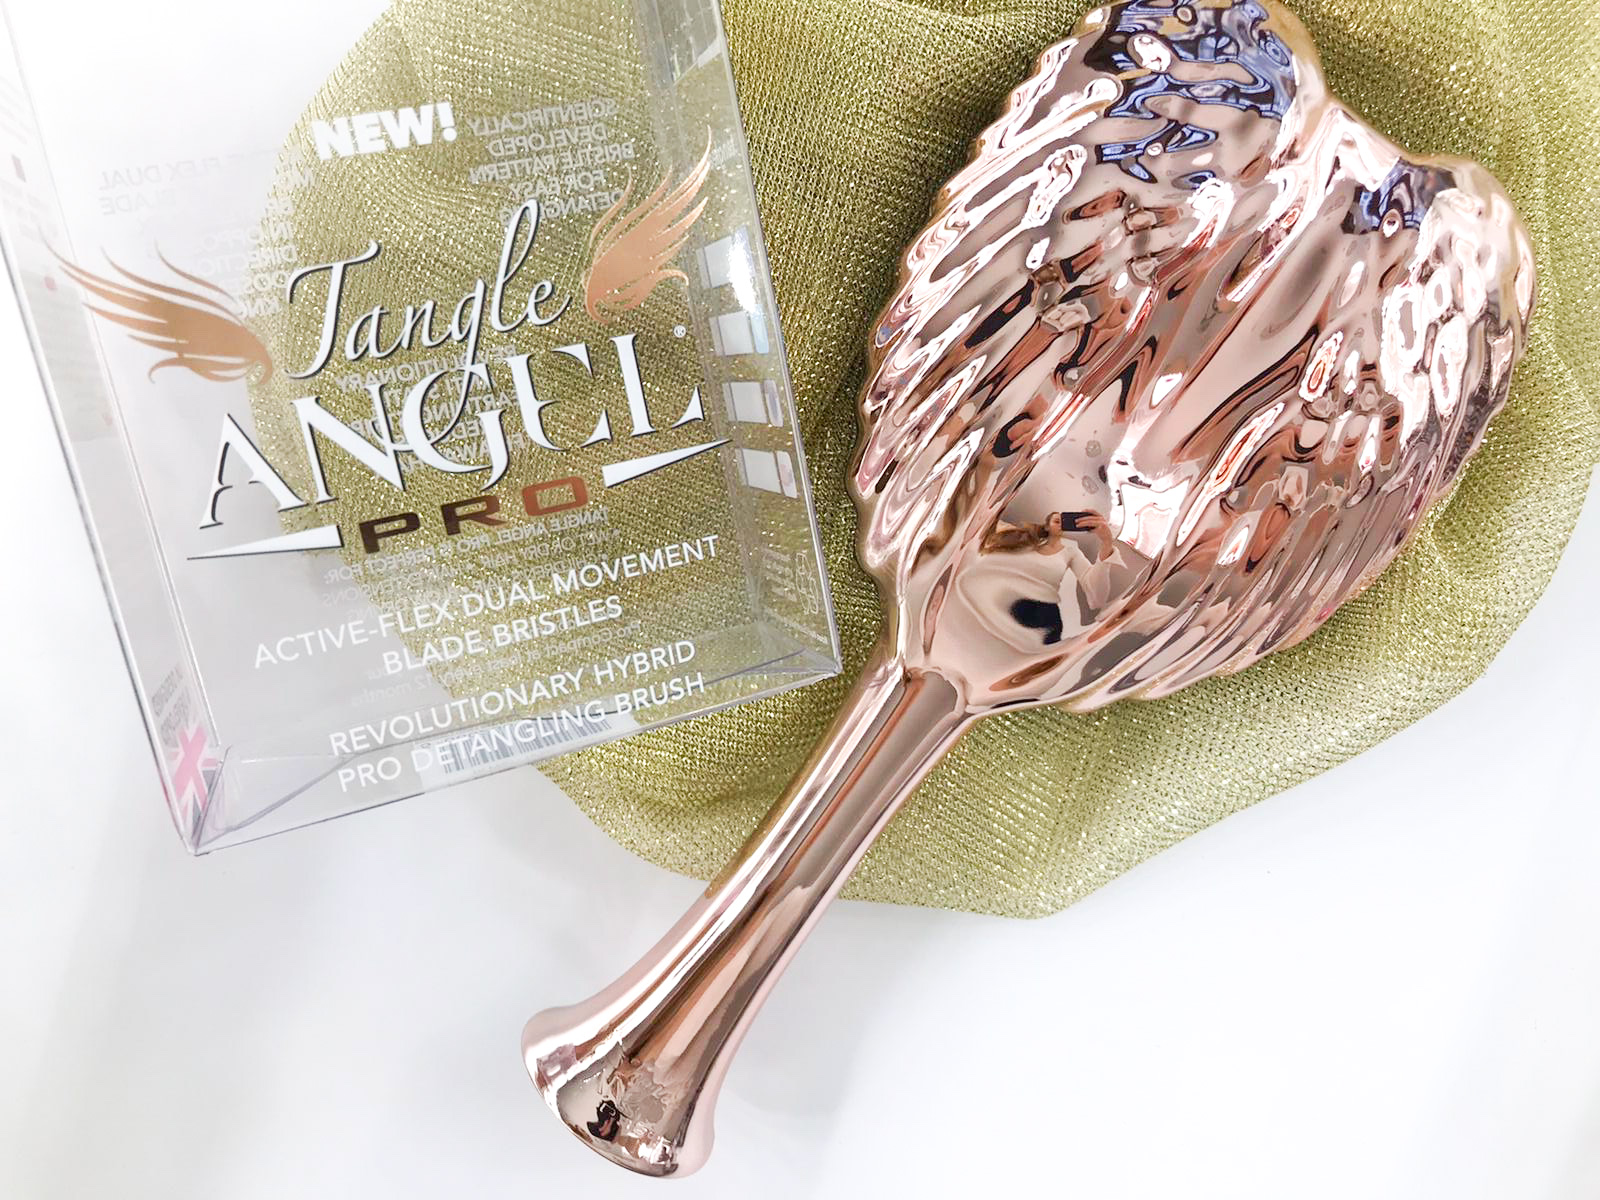 Tangle Angel Pro Rose gold